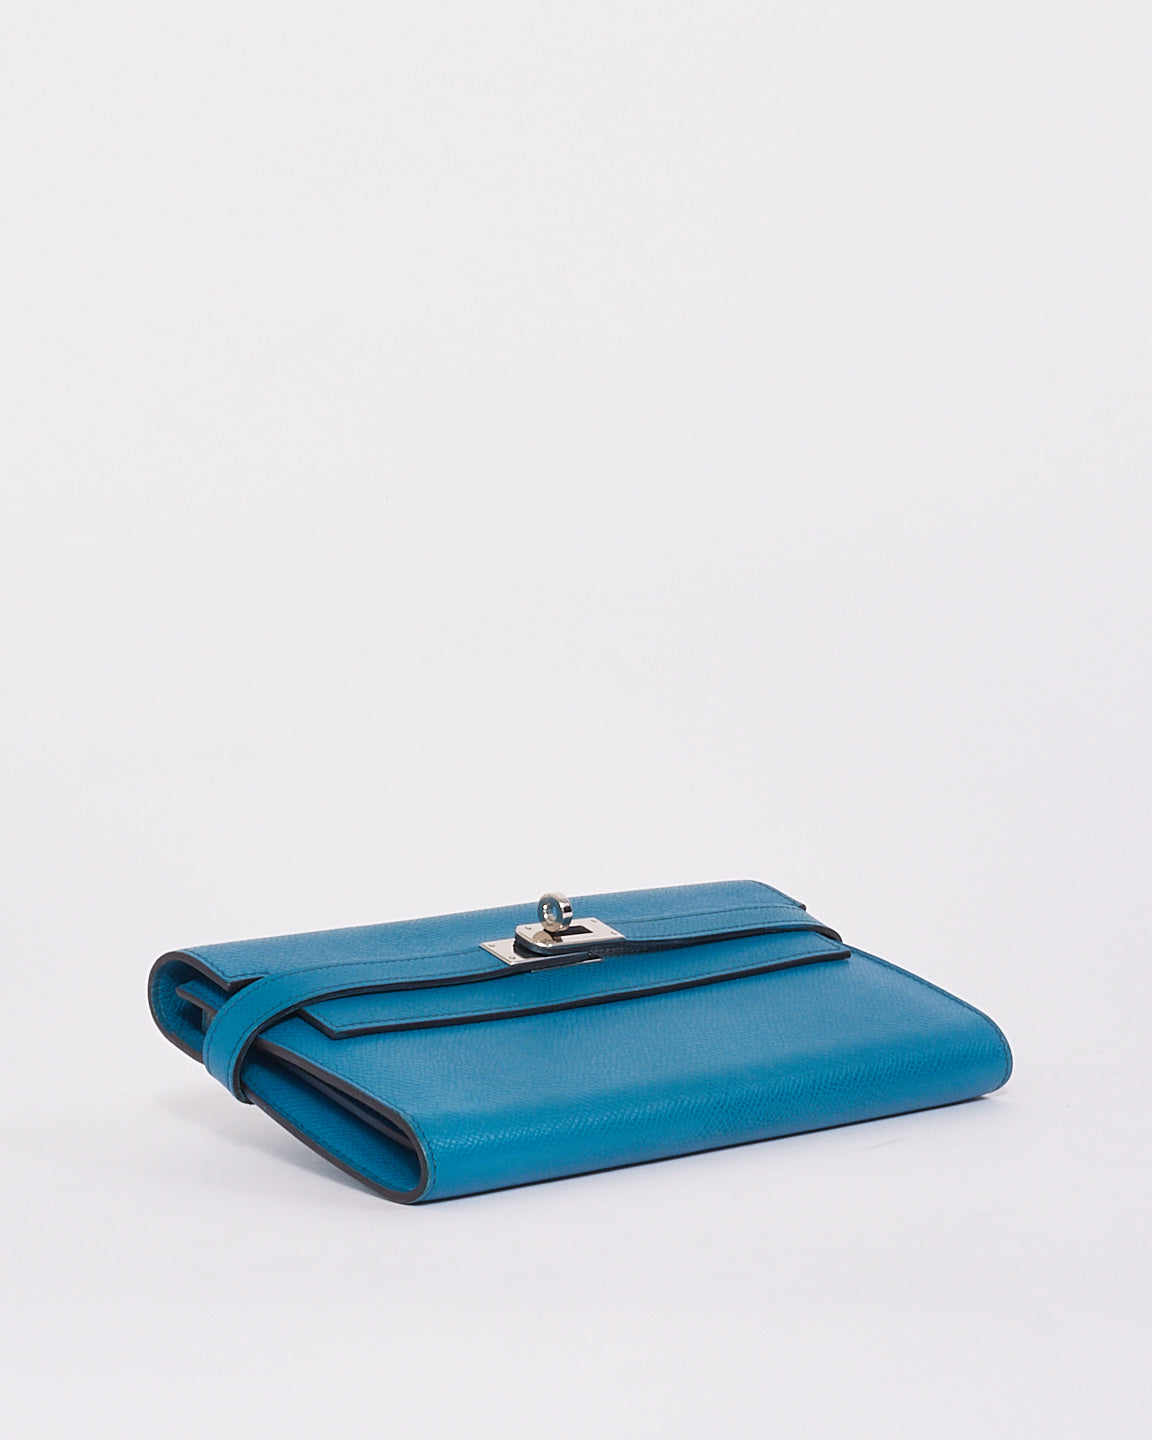 Hermès Blue Colvert Epsom Kelly Classic Wallet